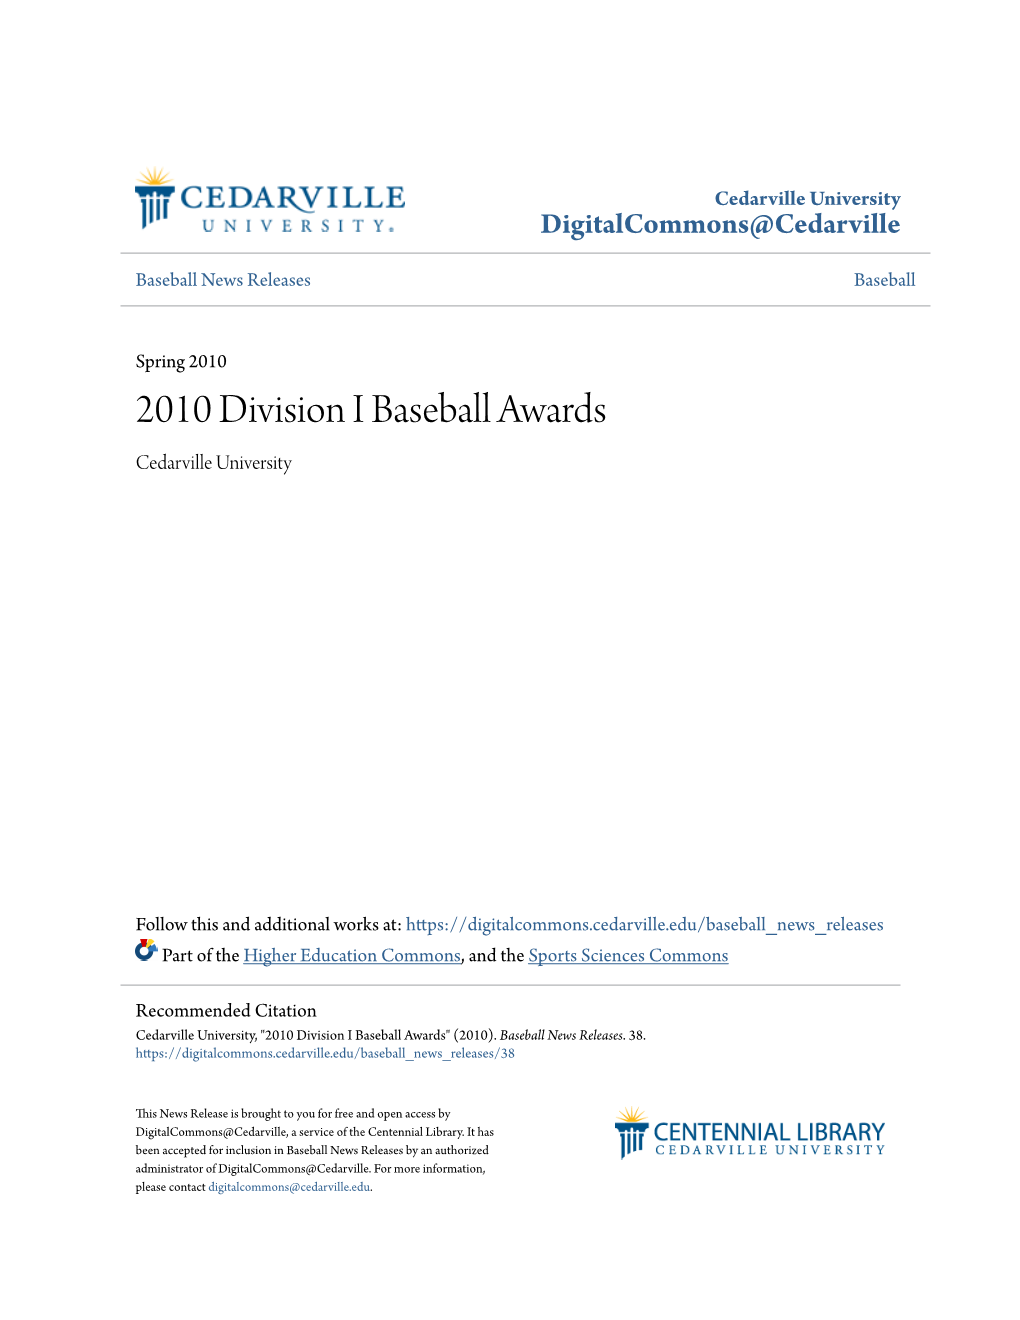 2010 Division I Baseball Awards Cedarville University